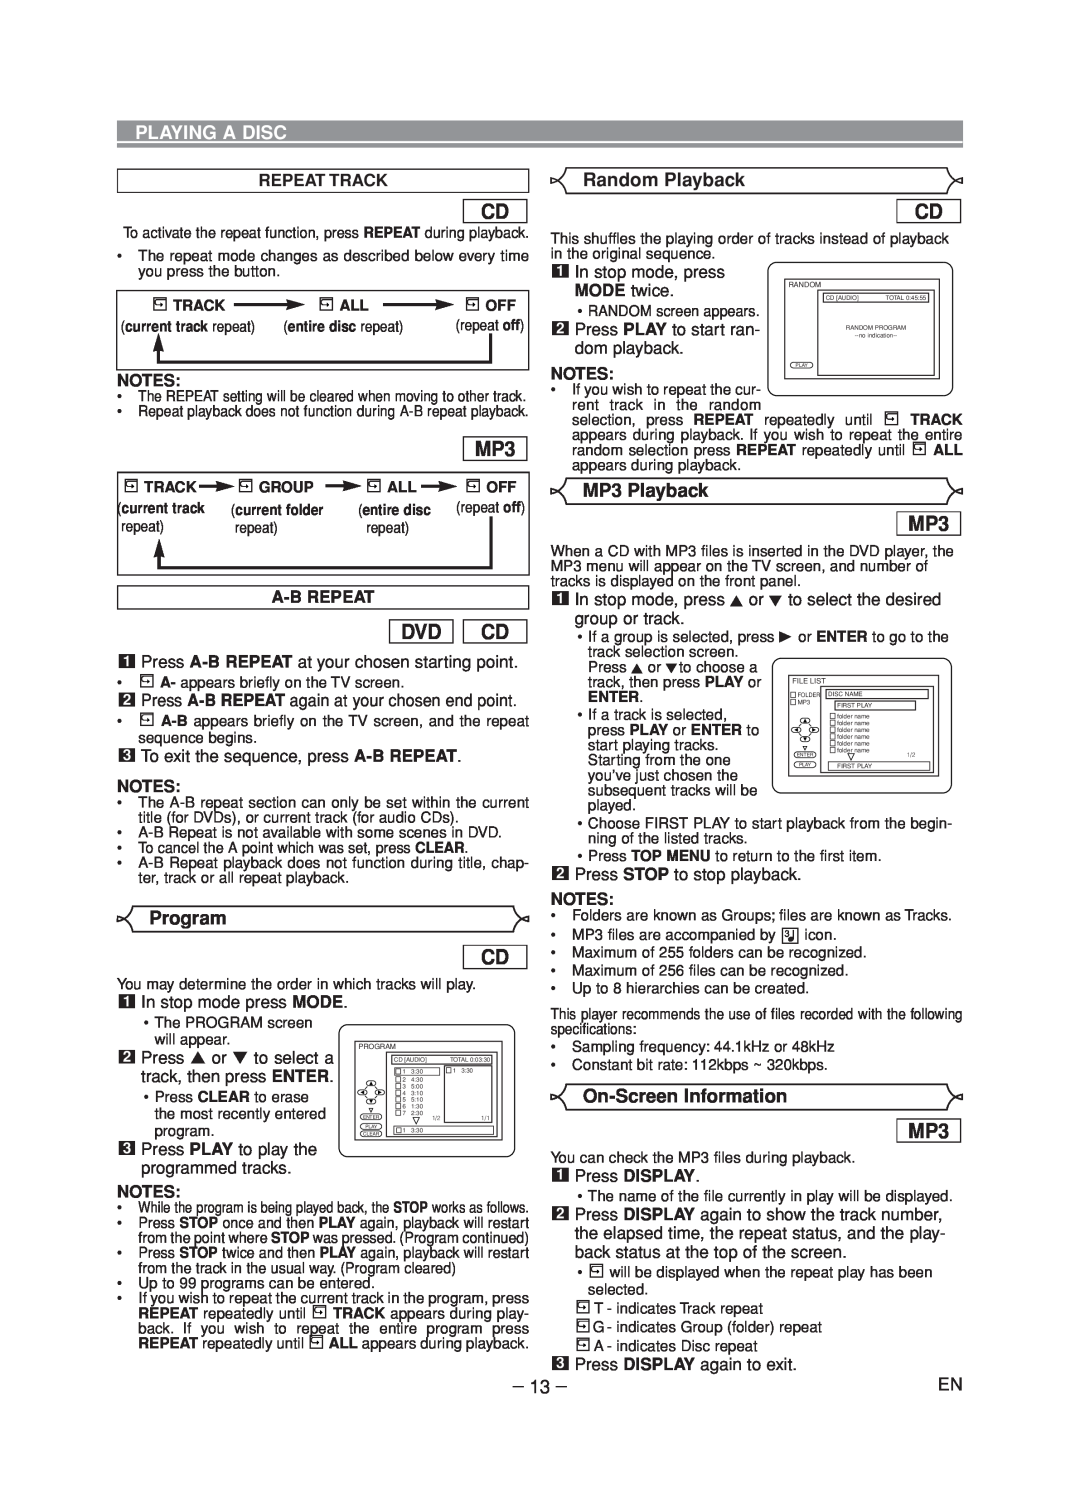 Hitachi DVP735U instruction manual Random Playback, Program, MP3 Playback, On-Screen Information, Dvd Cd, Playing A Disc 